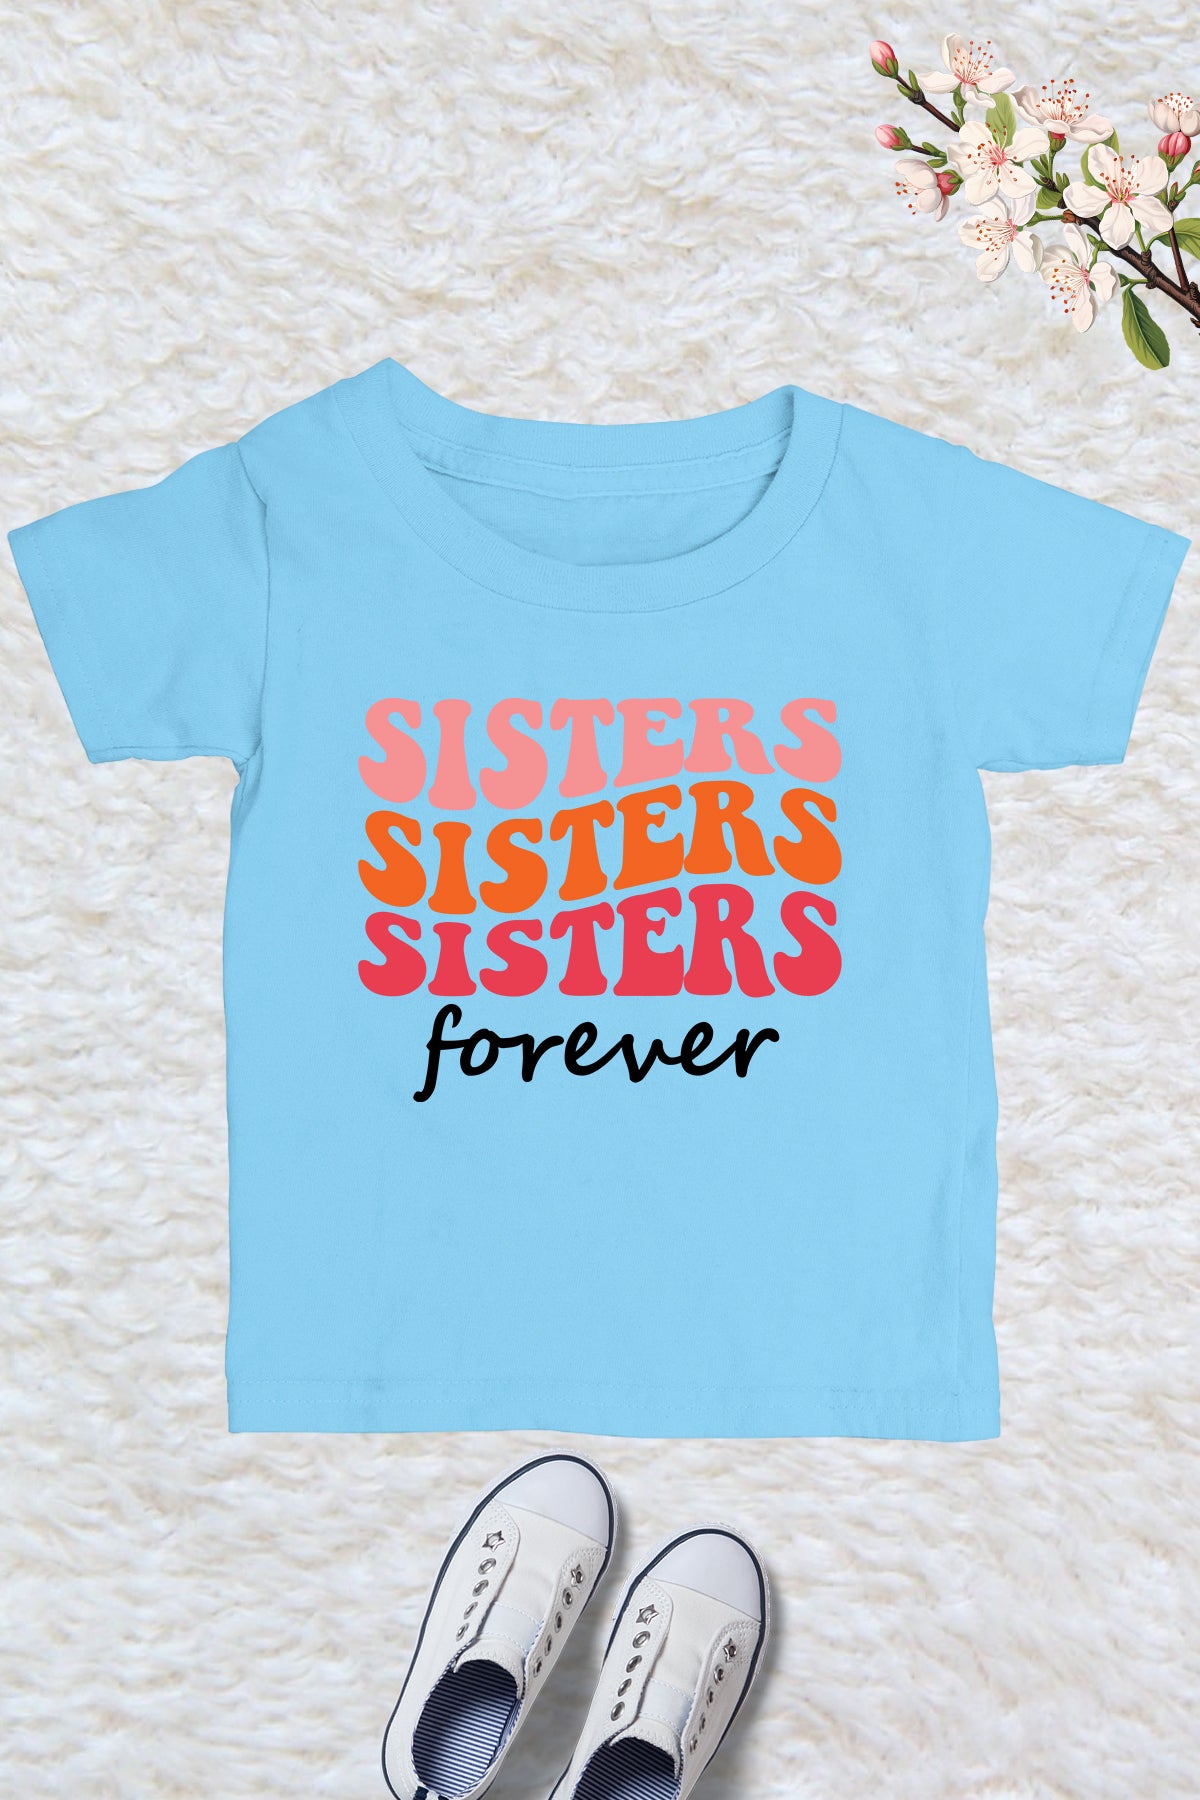 Sisters Forever Kids Shirt